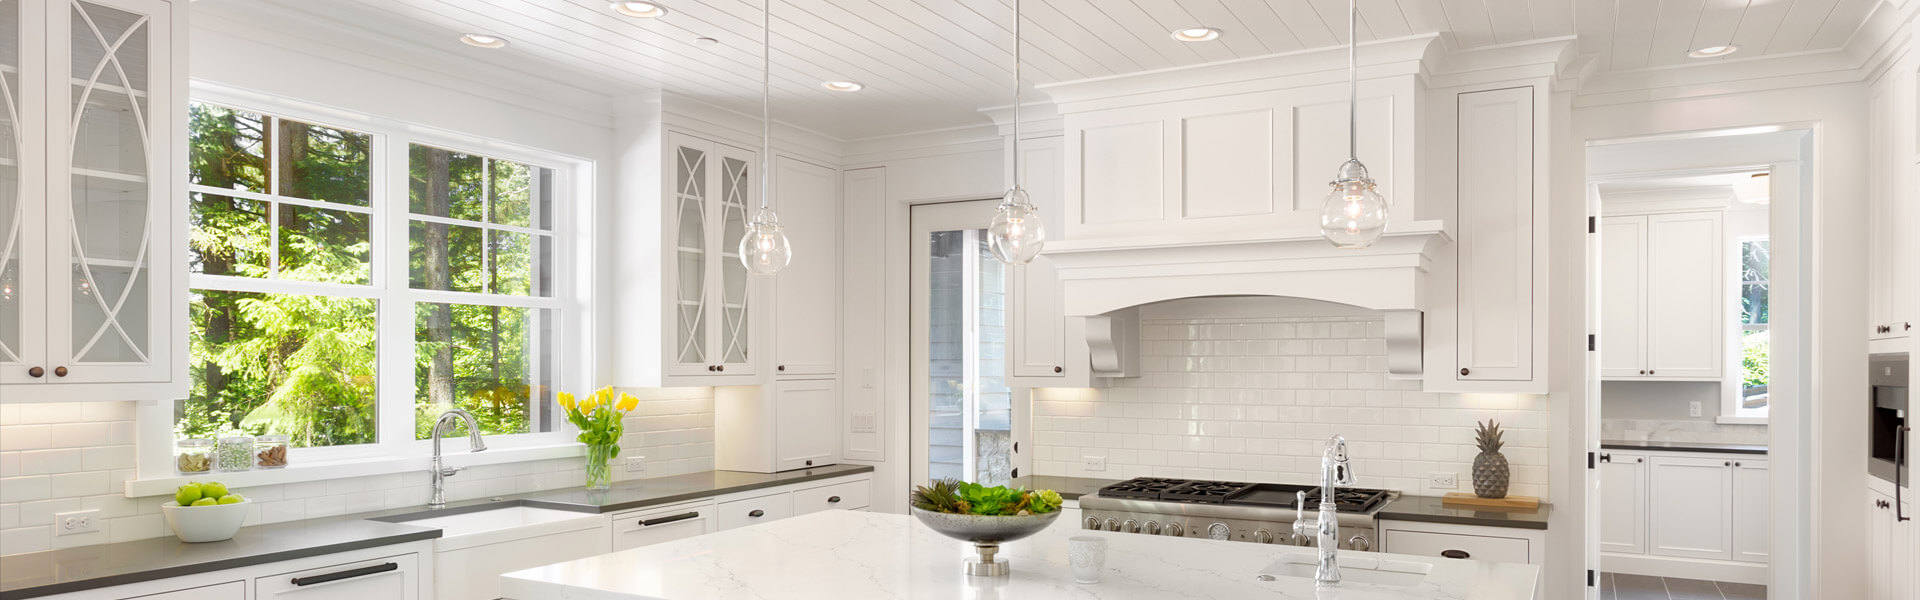 The sun shines through a kitchen casement window into a modern white marble kitchen.